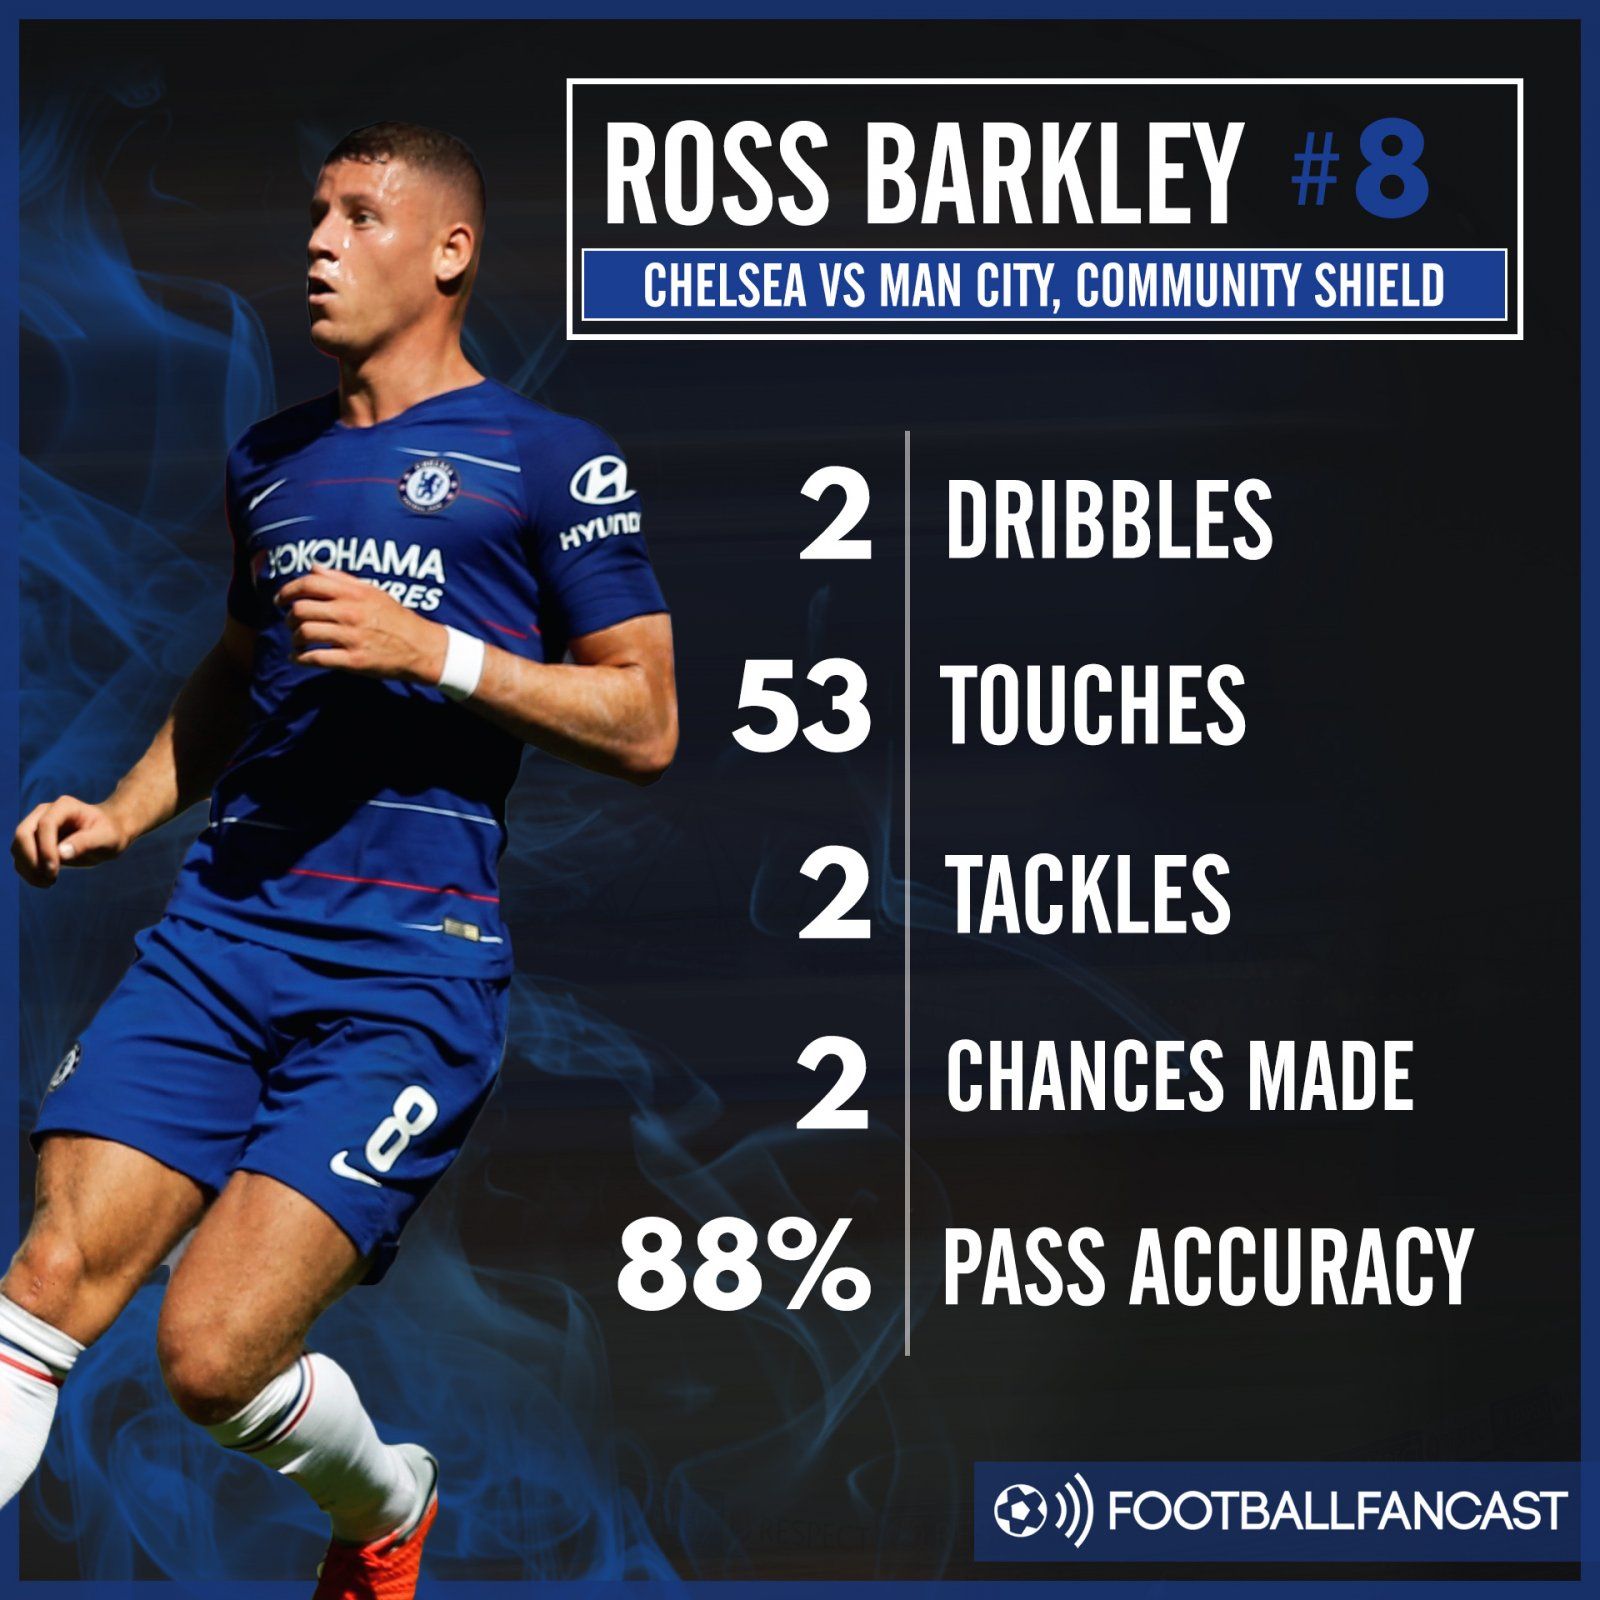 Ross Barkley's stats from Community Shield